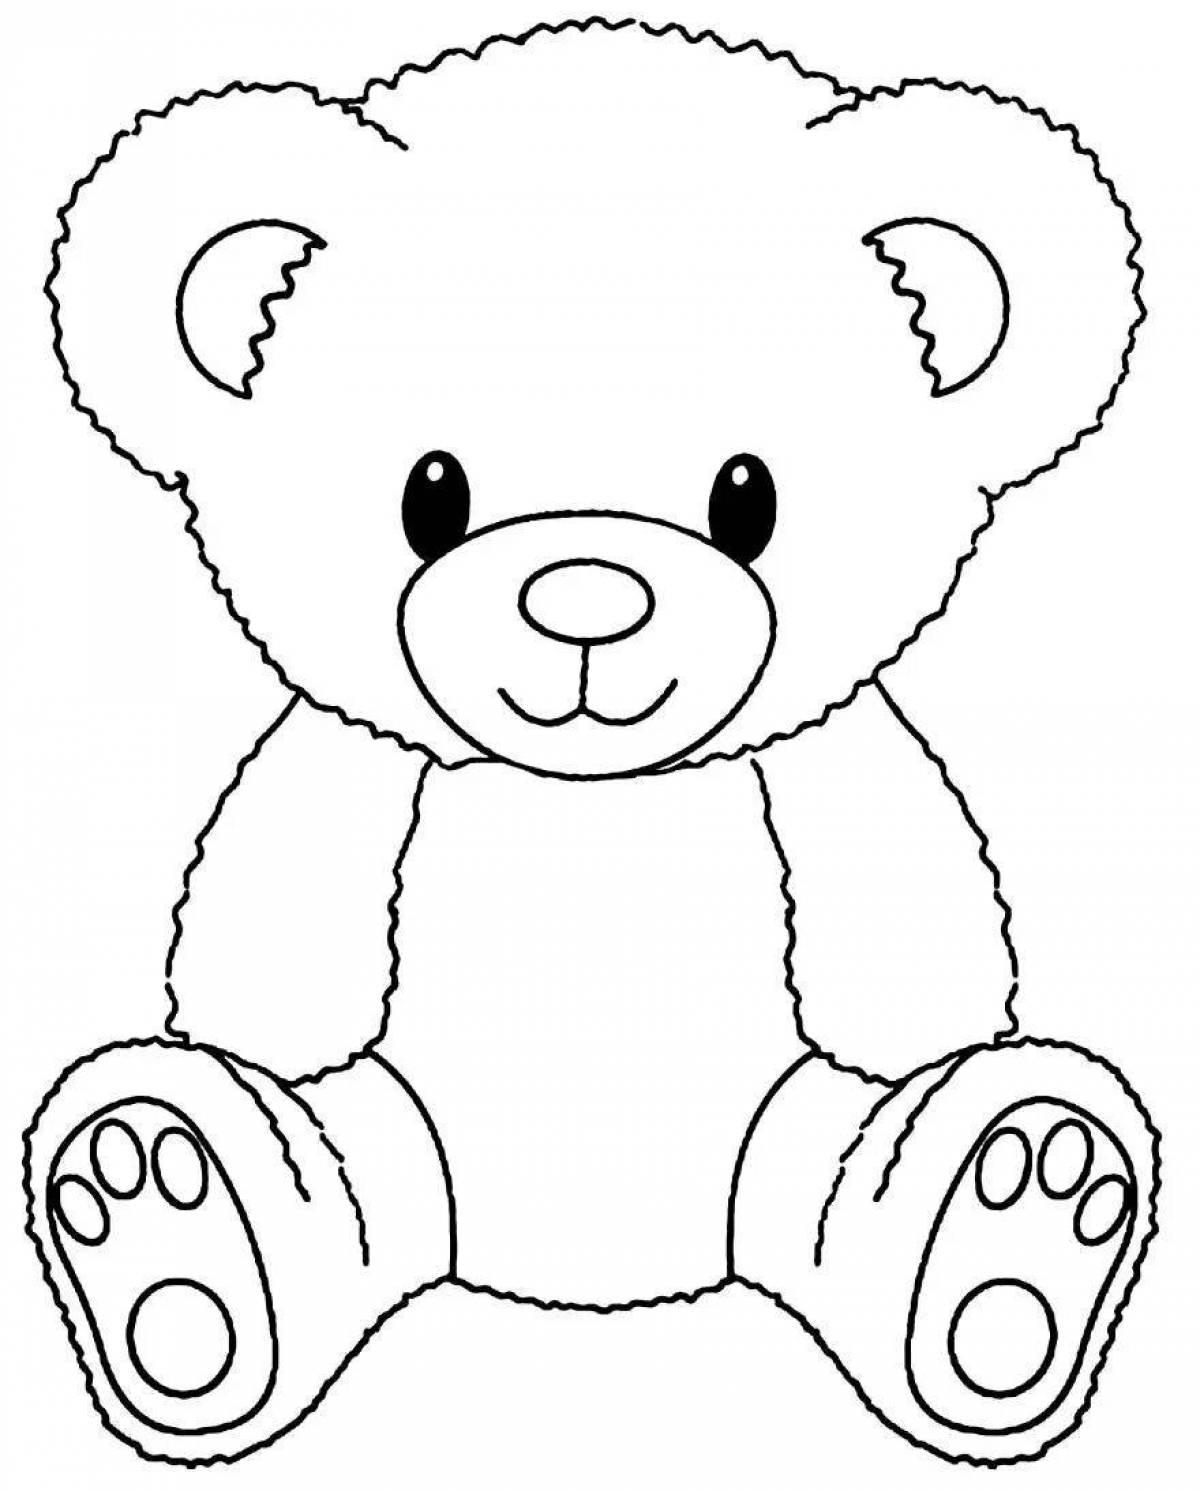 Coloring funny teddy bear